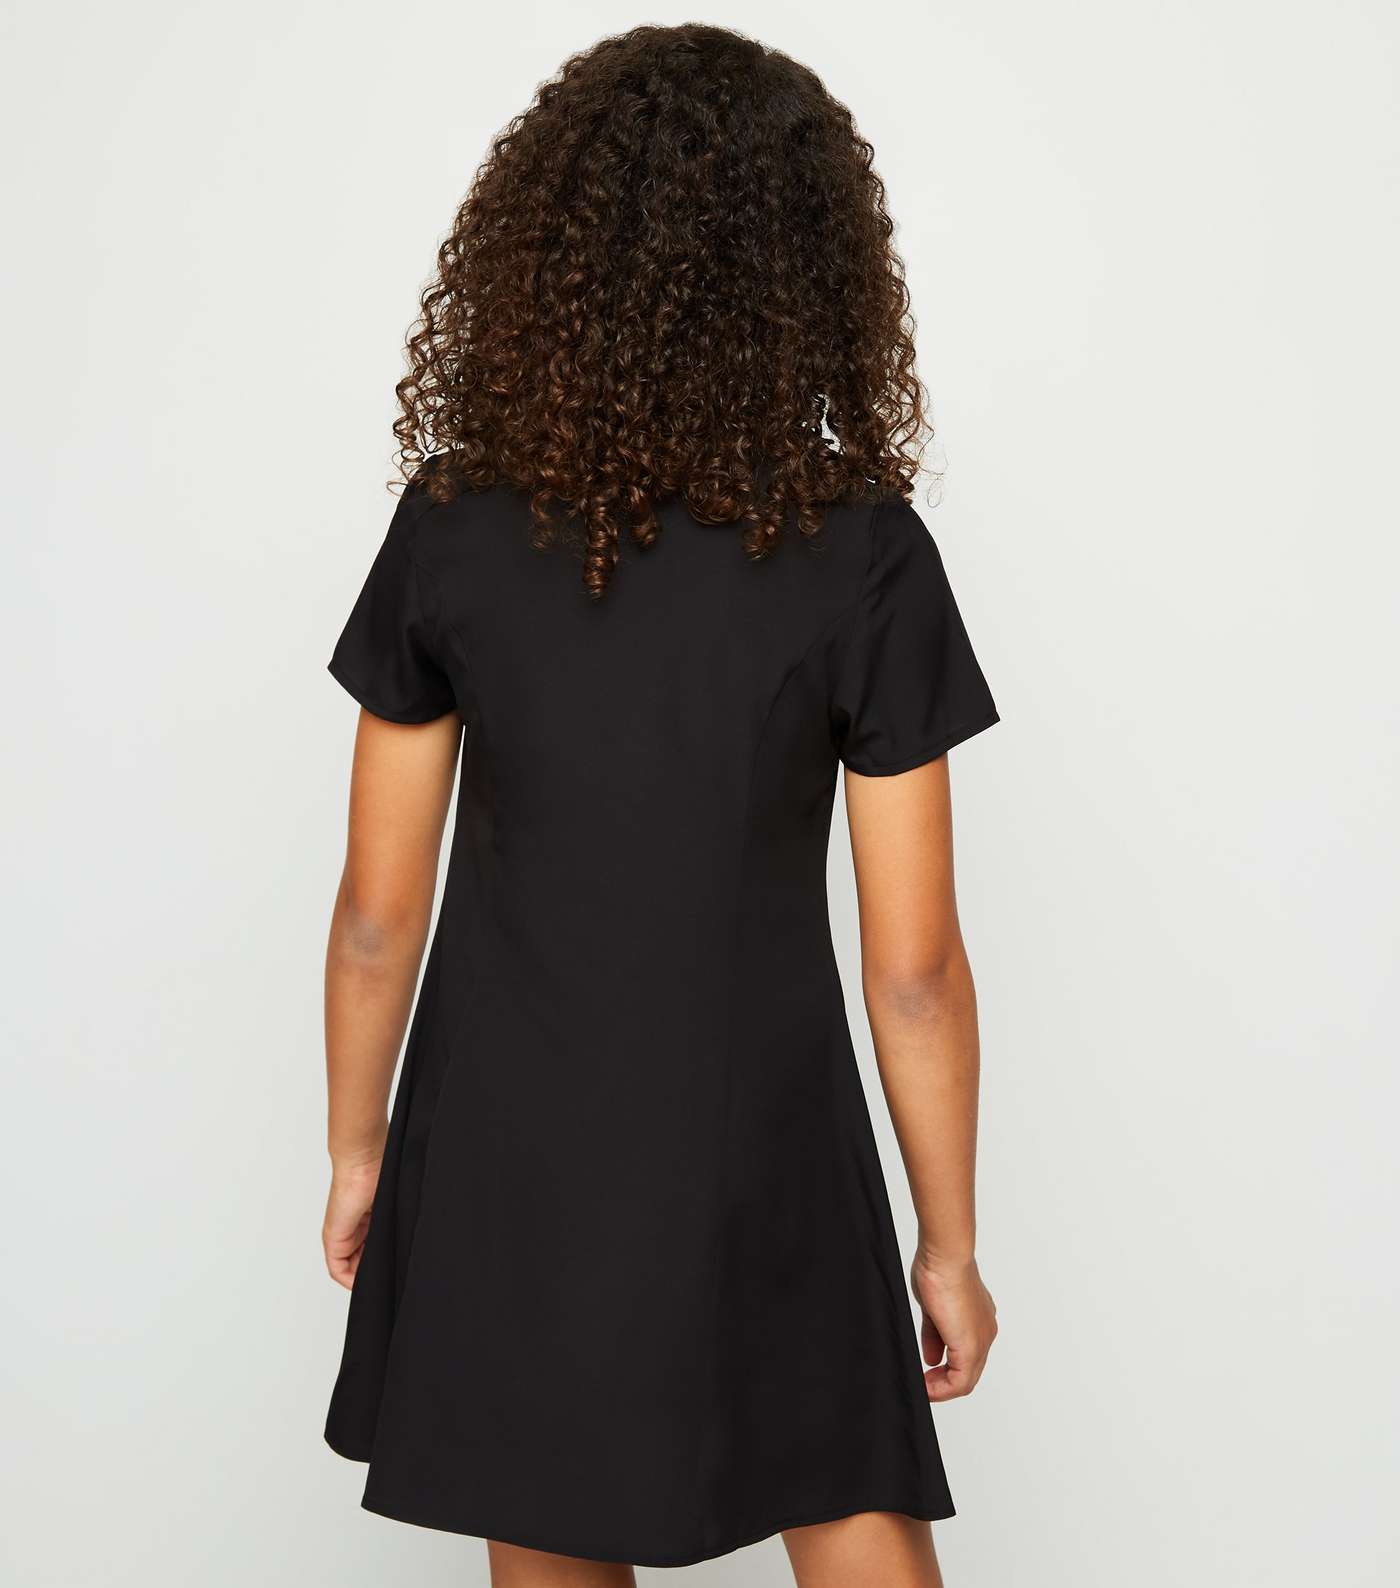 Girls Black Plain Tea Dress Image 3